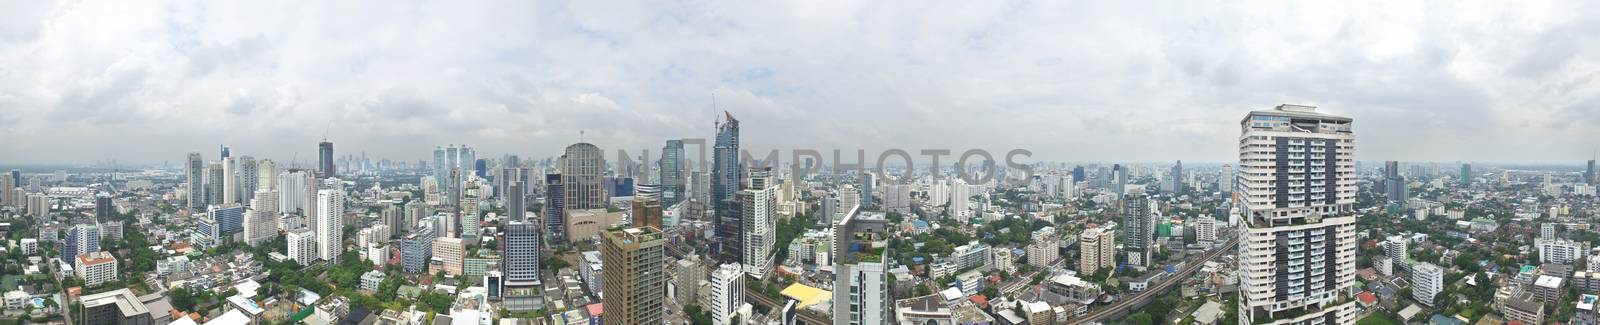 panorama of sukhumvit area in bangkok city